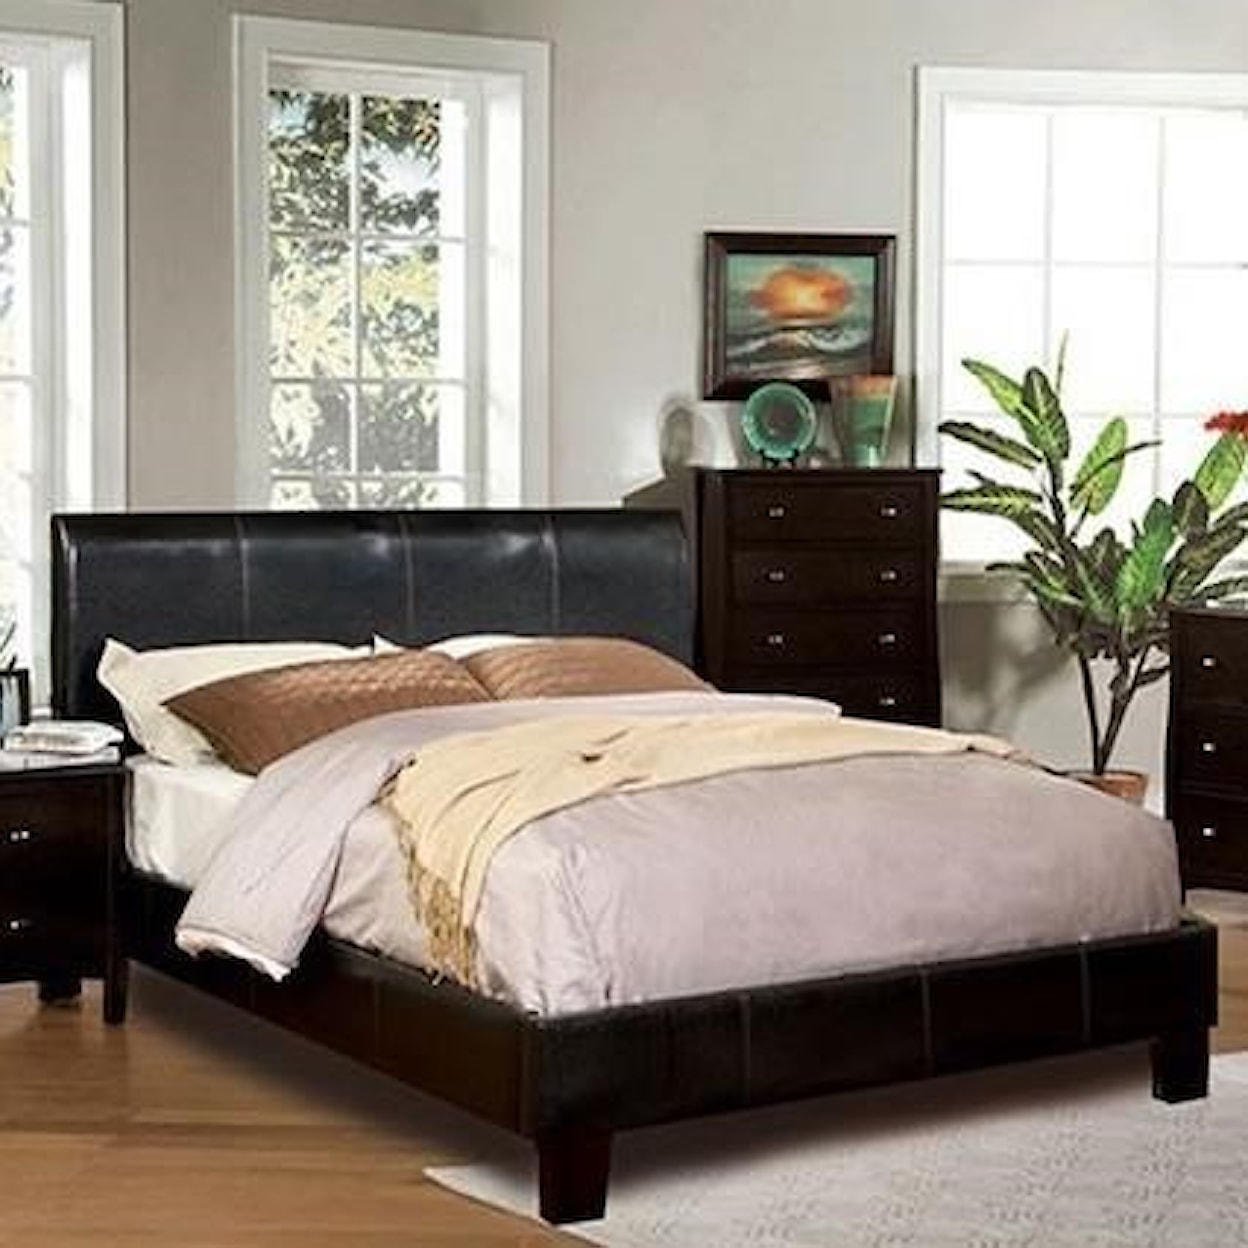 Furniture of America Villa Park Queen Bed